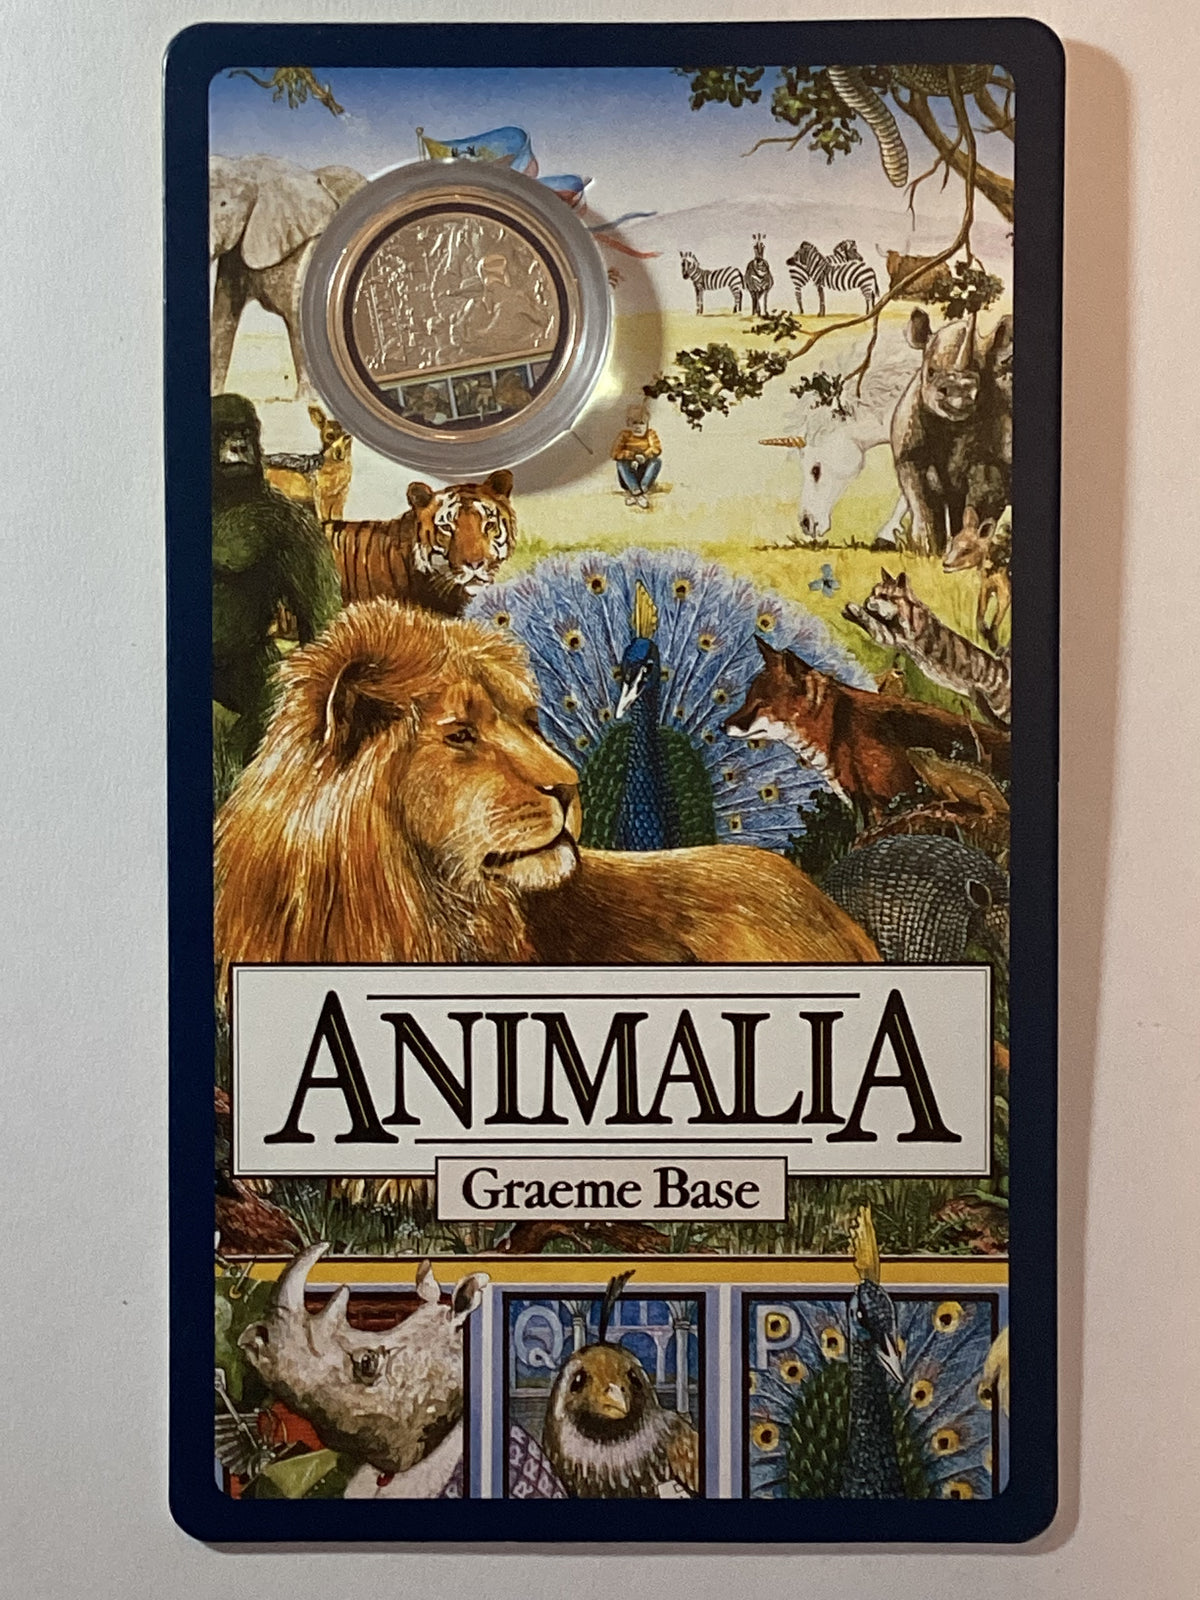 2021 20c Animalia Uncirculated Carded Coin